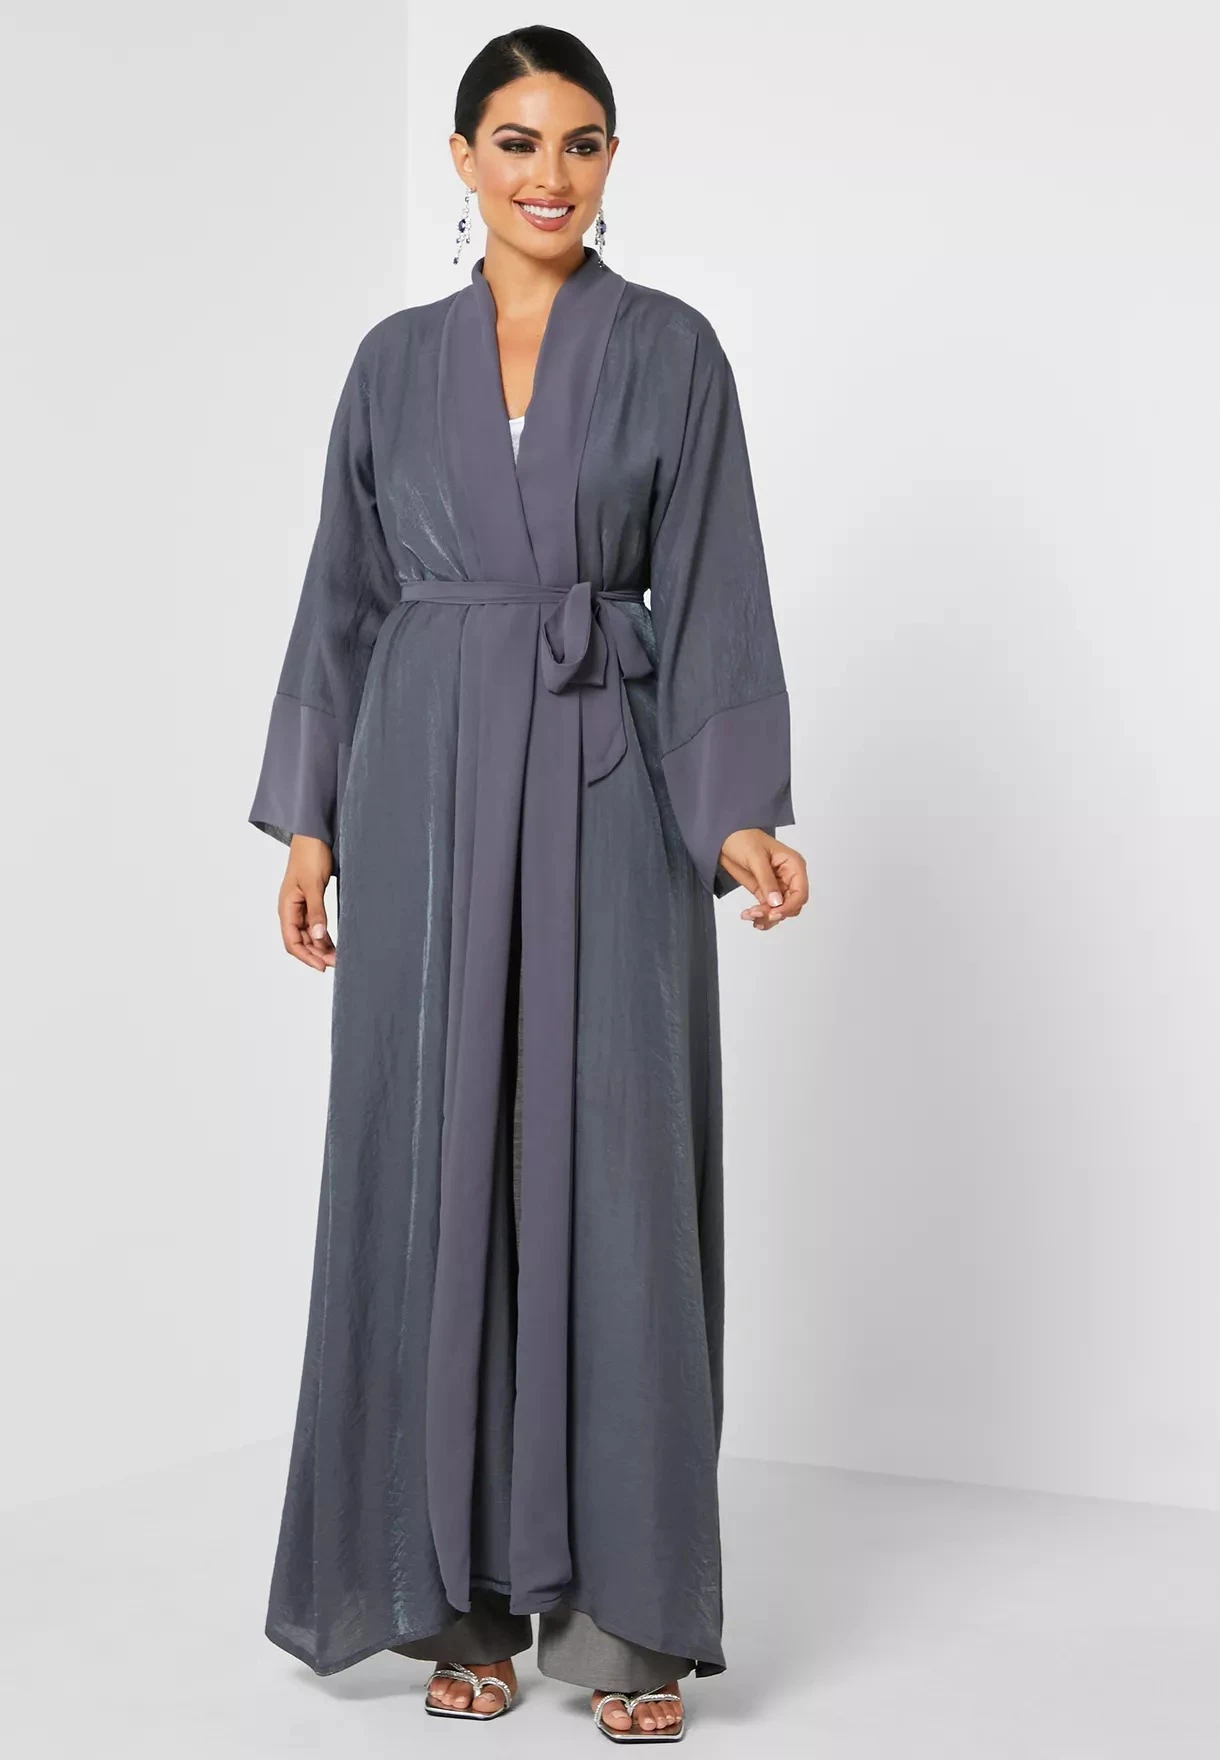 Oem Custom Islamic Dubai High Fashion Plus Size Front Open Plain Satin Colorblock Abaya Kimino Kaftans With Belt